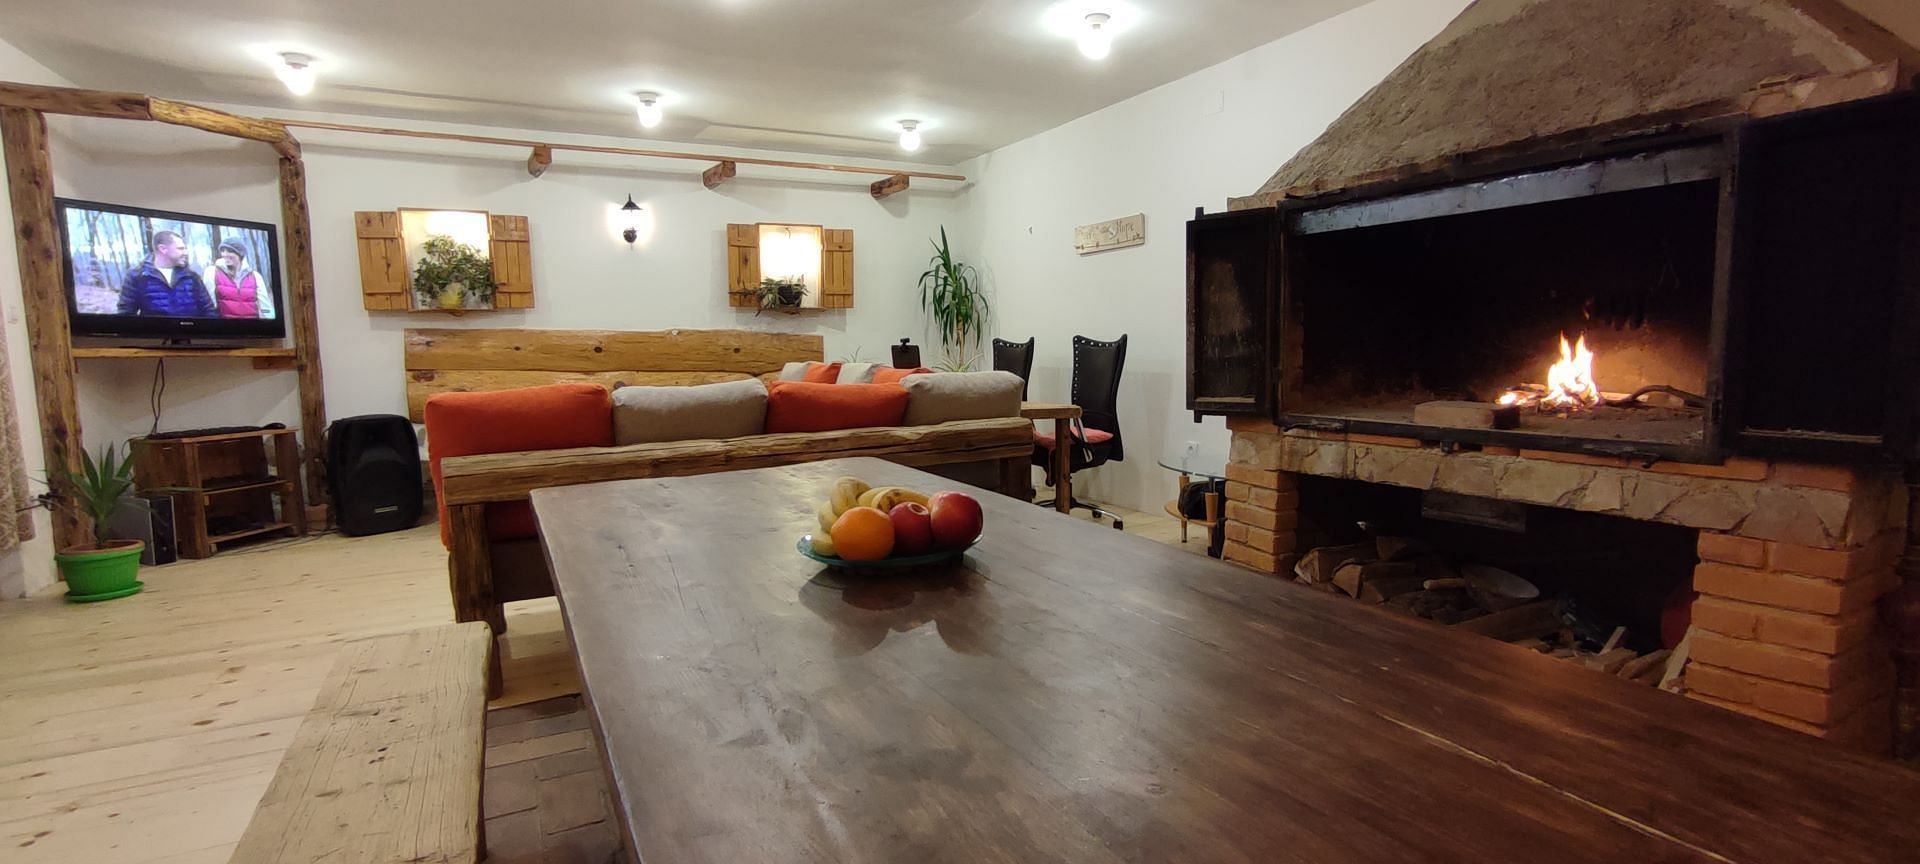 JWguest Apartment at Banja Luka, Republika Srpska | Rustic apartment and lounge for socializing | Jwbnb no brobnb 10